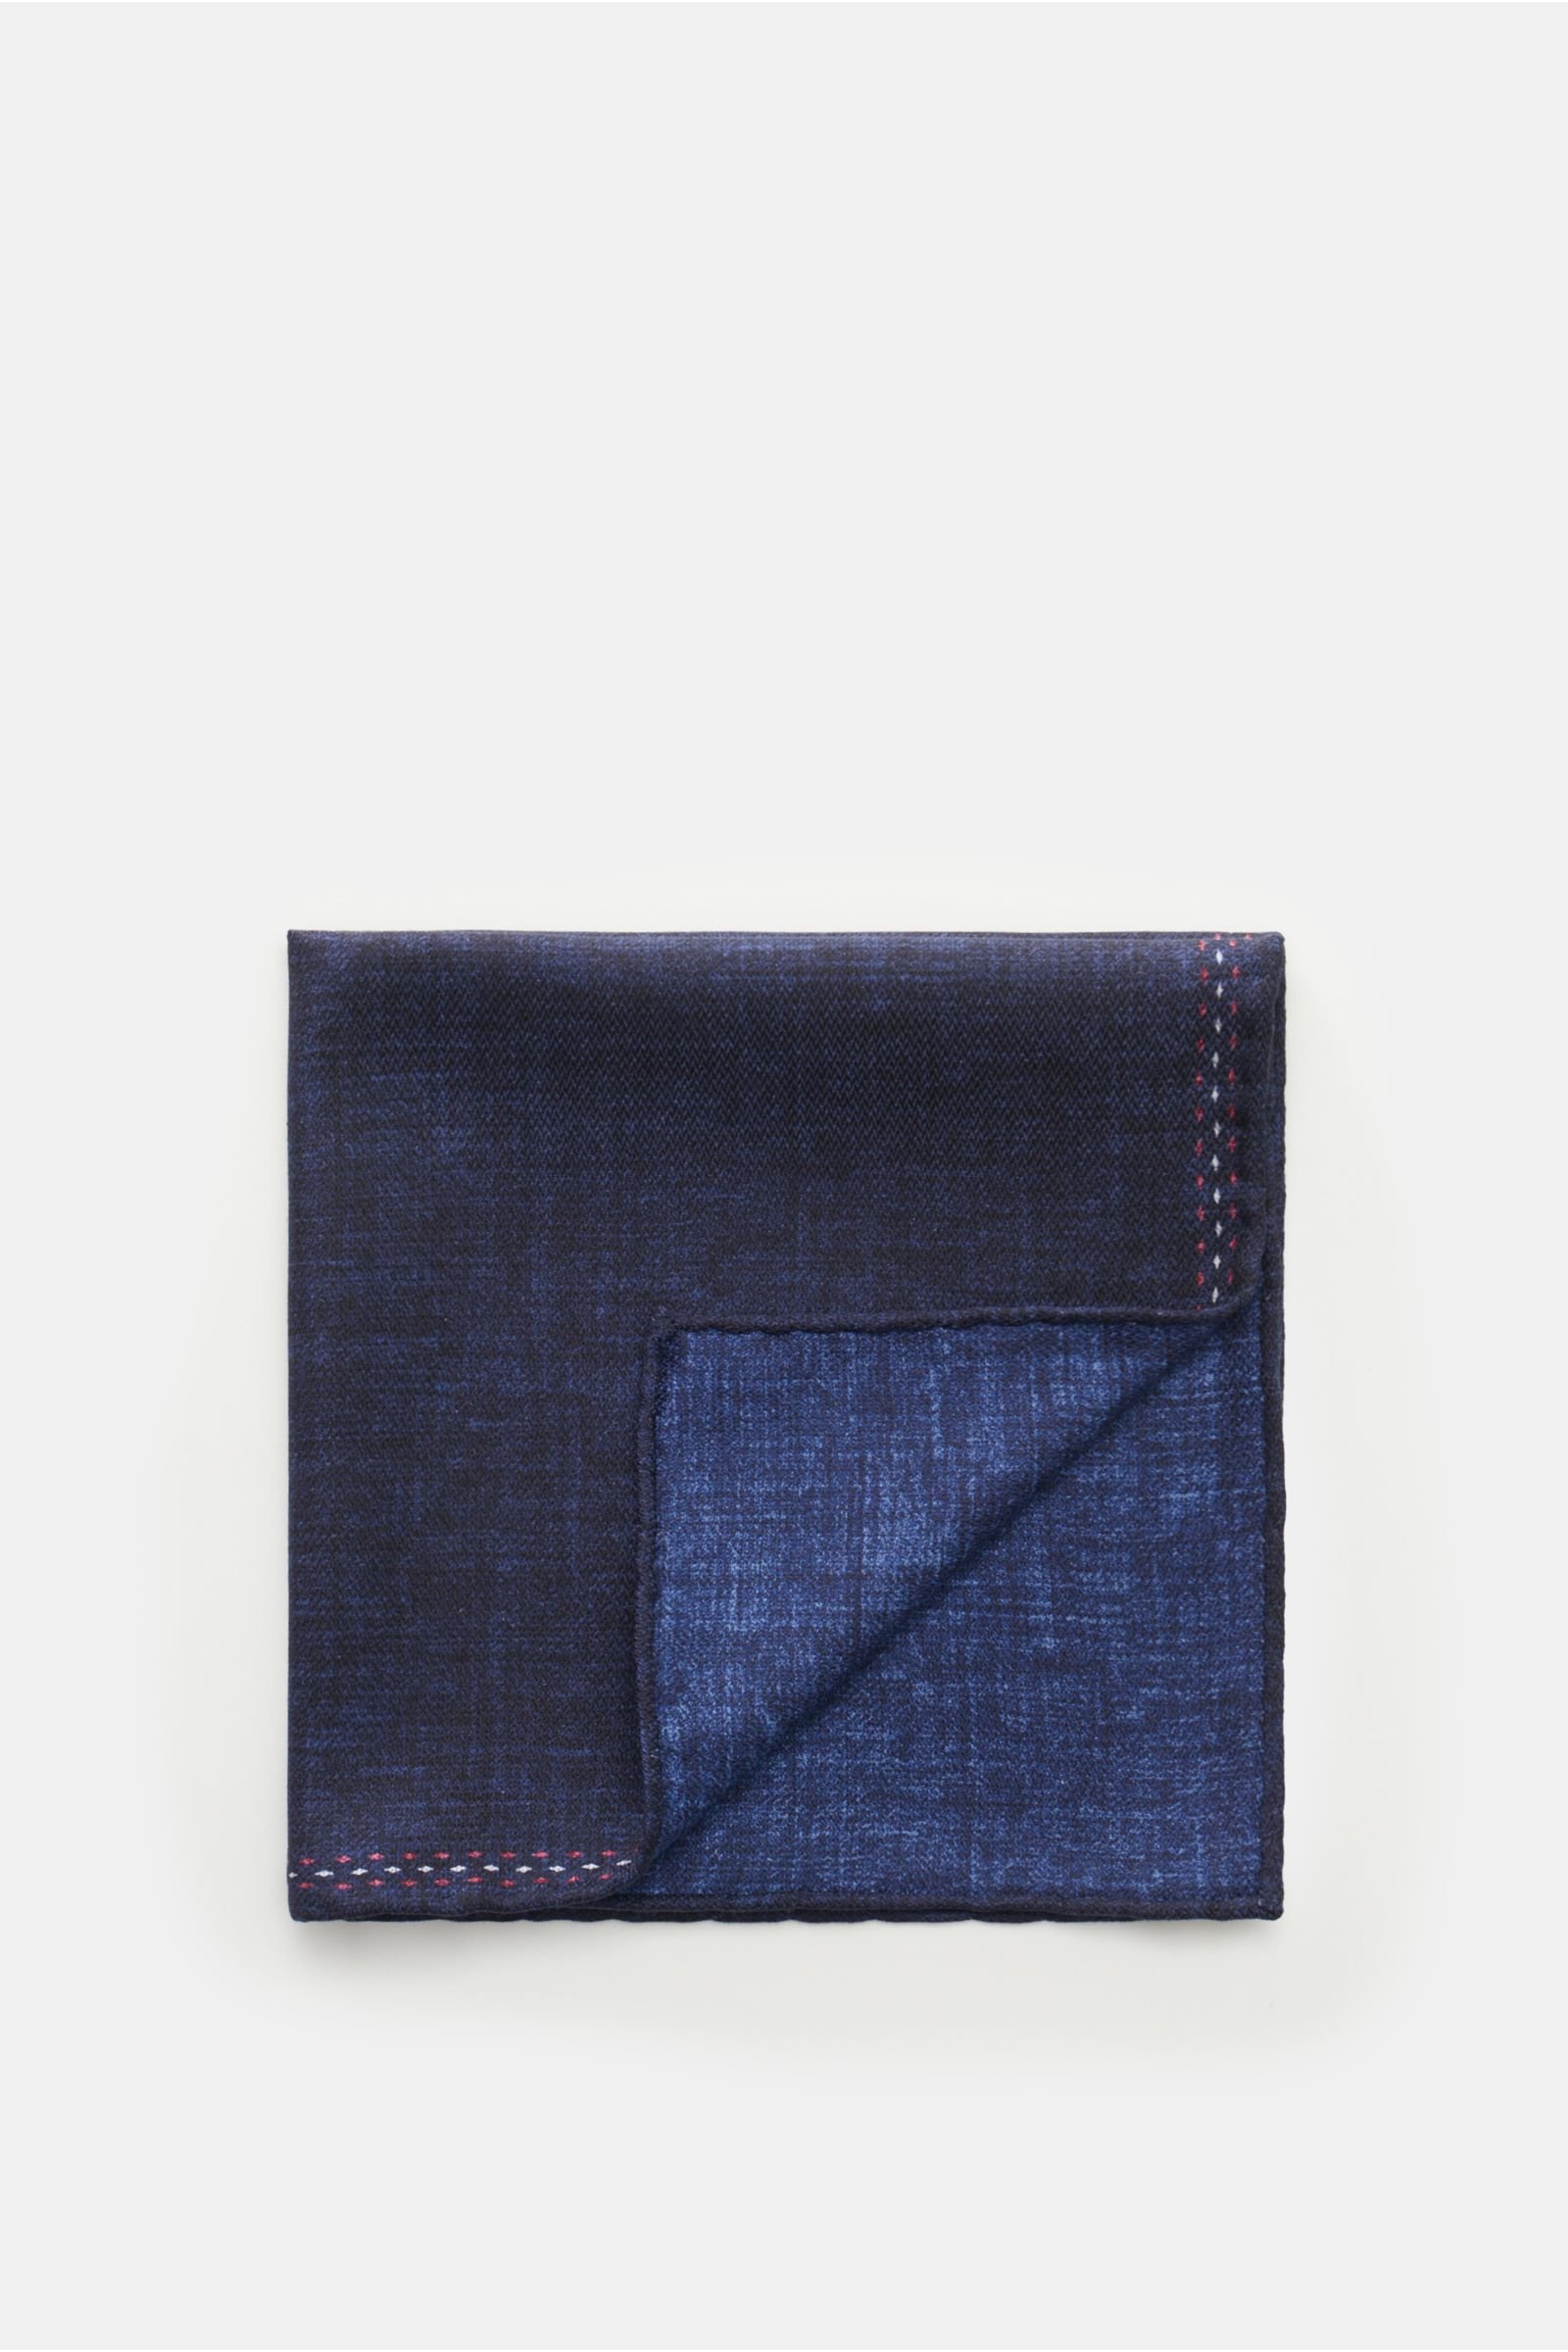 Silk pocket square navy/dark blue mottled